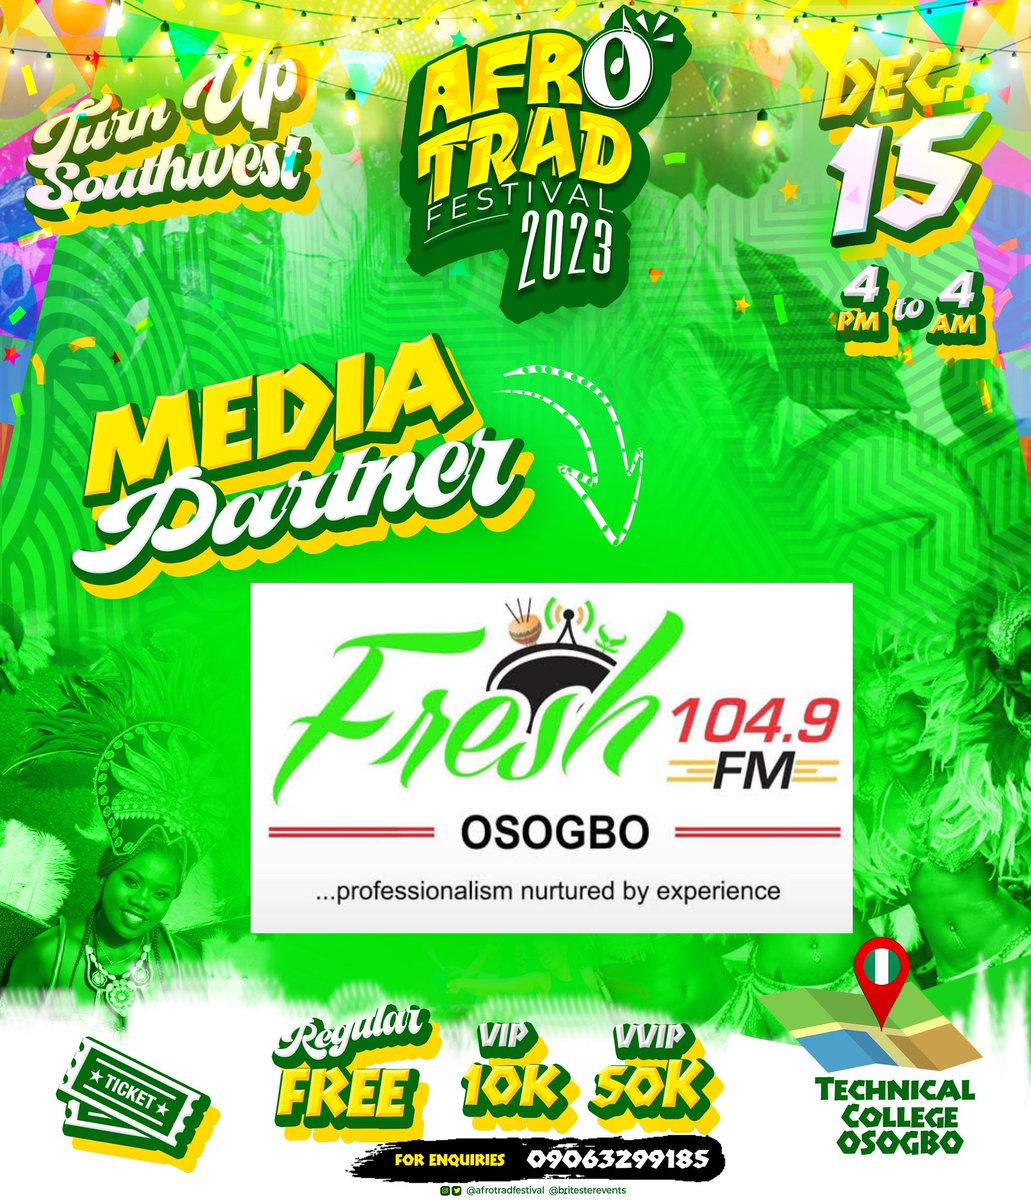 @freshfmosogbo | AfroTradFestival2023 OFFICIAL MEDIA PARTNER 💚💫

#afrotradfestival2023